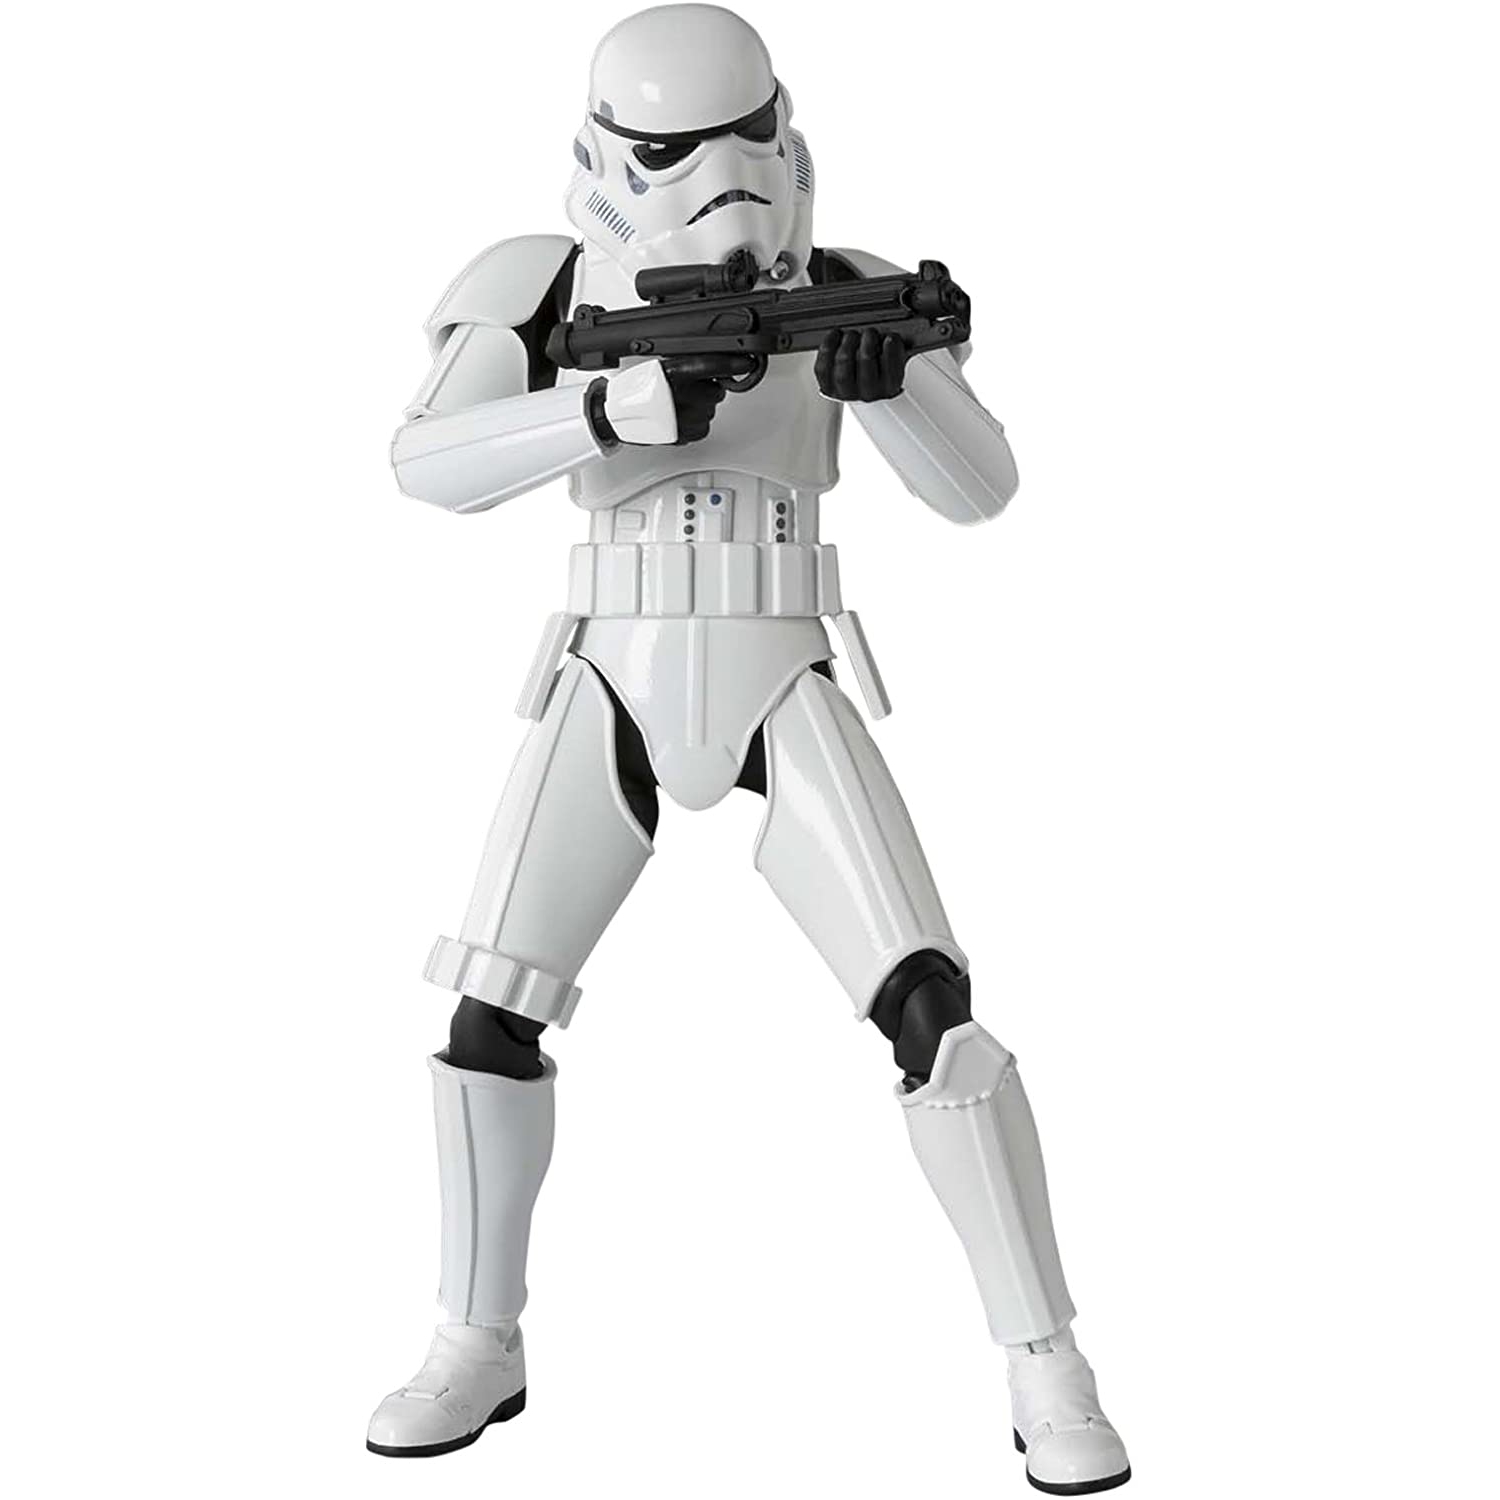 S.H.Figuarts: Storm Trooper Star Wars 6" Action Figure